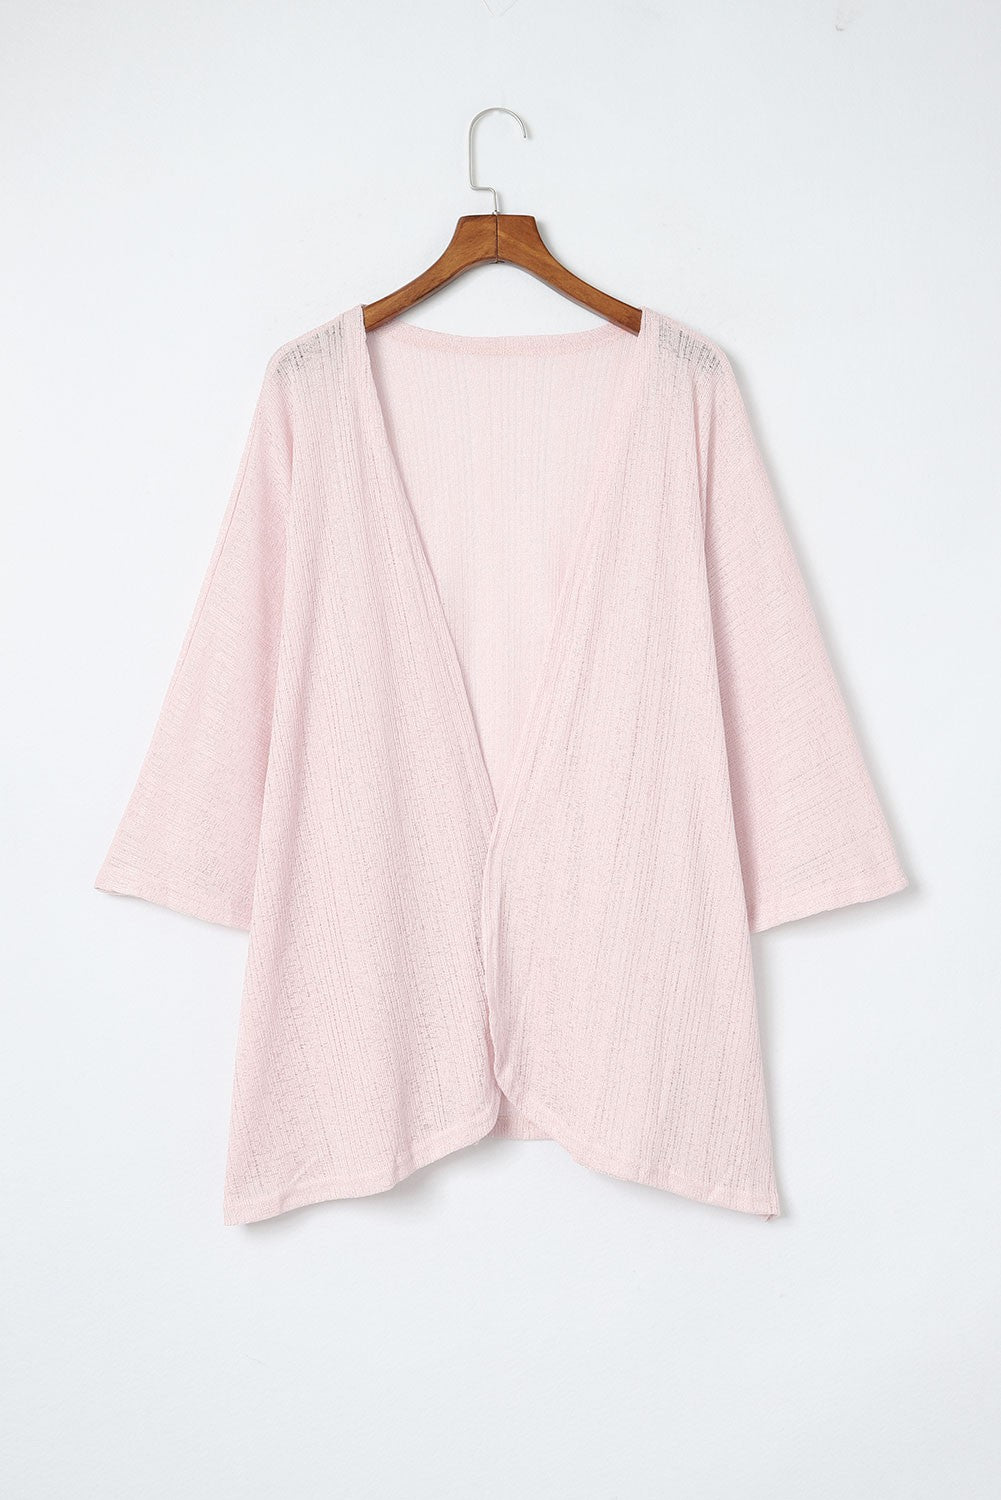 & Monroe Half Lightweight Sleeve Light Adelaide Boutique One – Jack - - Cardigan Size Pink